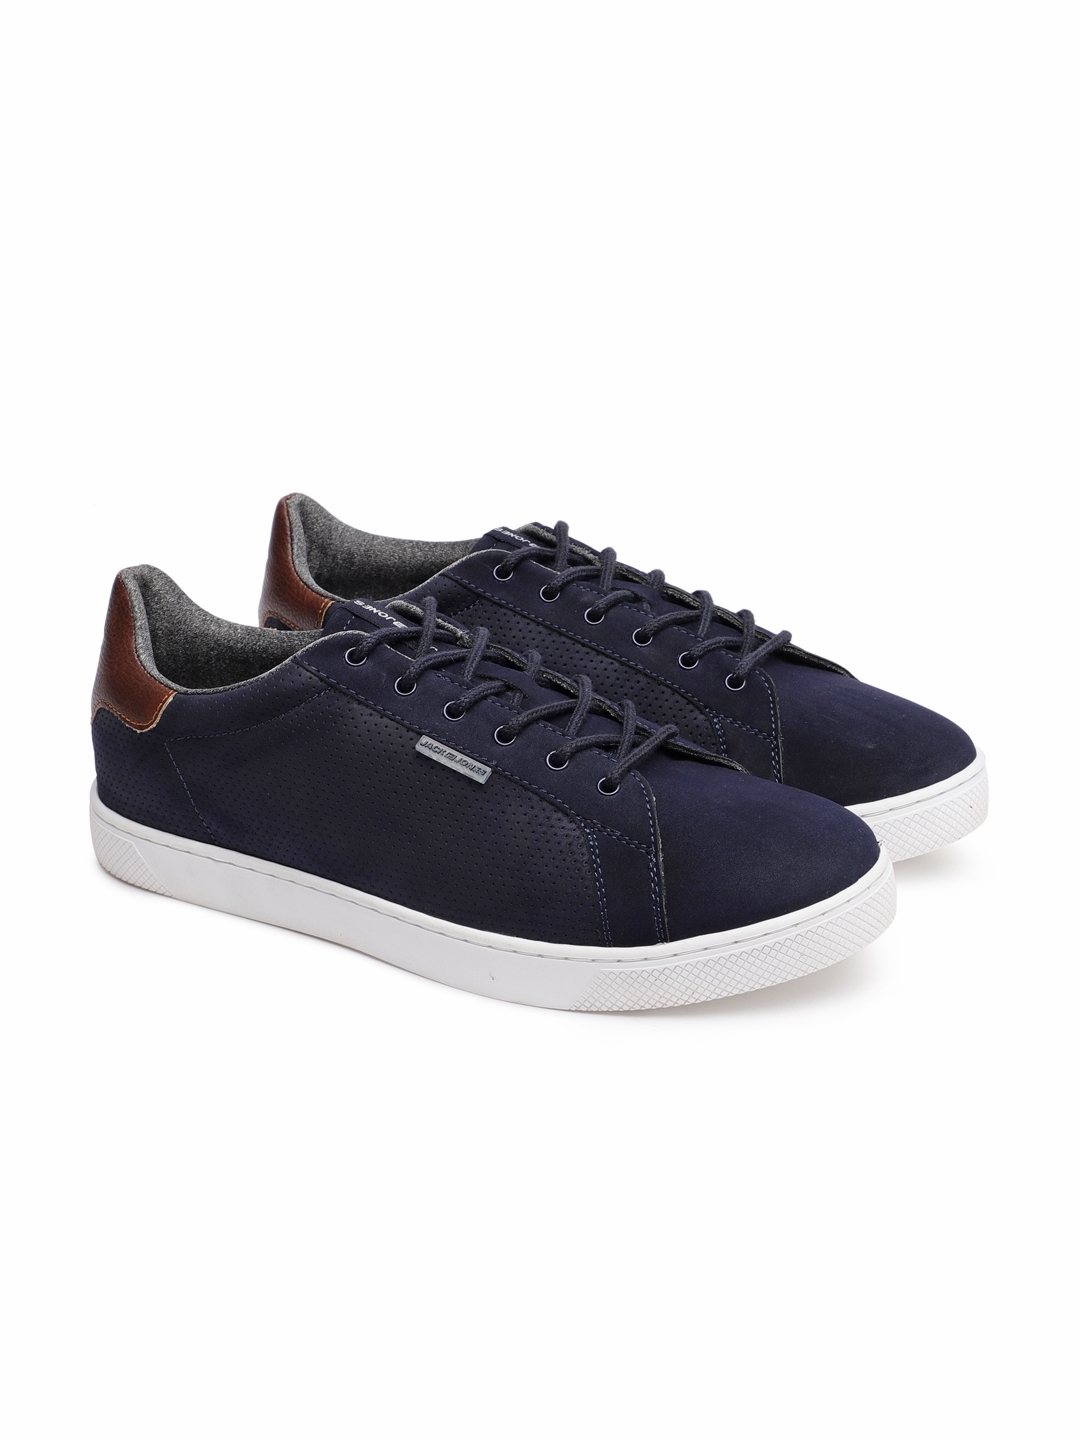 Buy Jack & Jones Men Blue Sneakers - Casual Shoes for Men 7713660 | Myntra